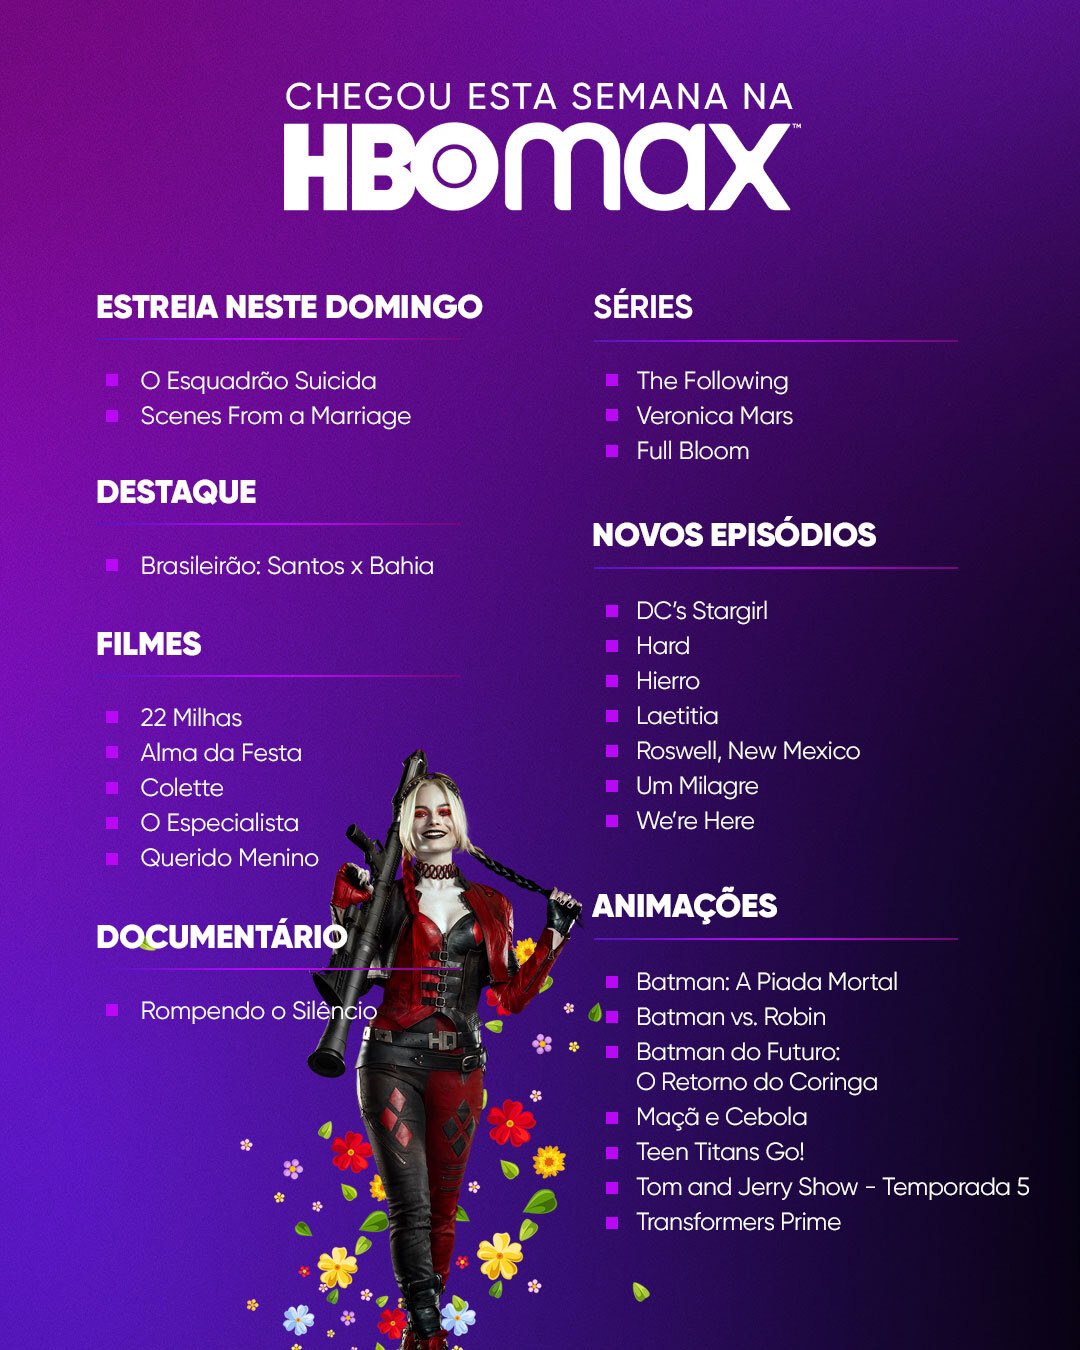 HBO Max Brasil on X: Os maiorais te esperam. Bora maratonar